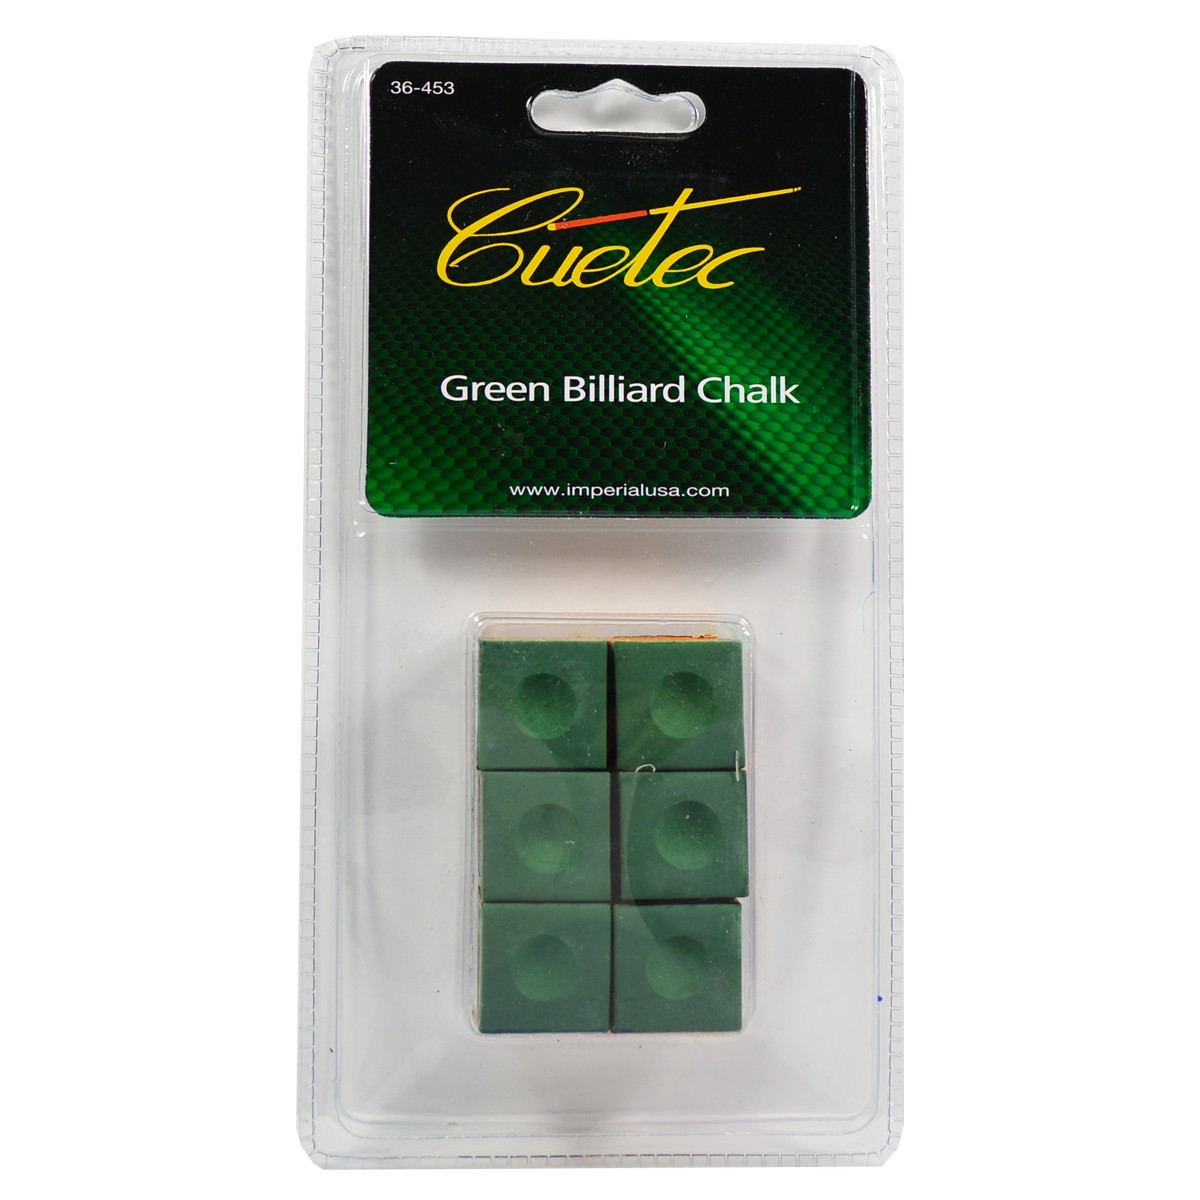 36-453 Cuetec Billiard Chalk, Green - Pack Of 6